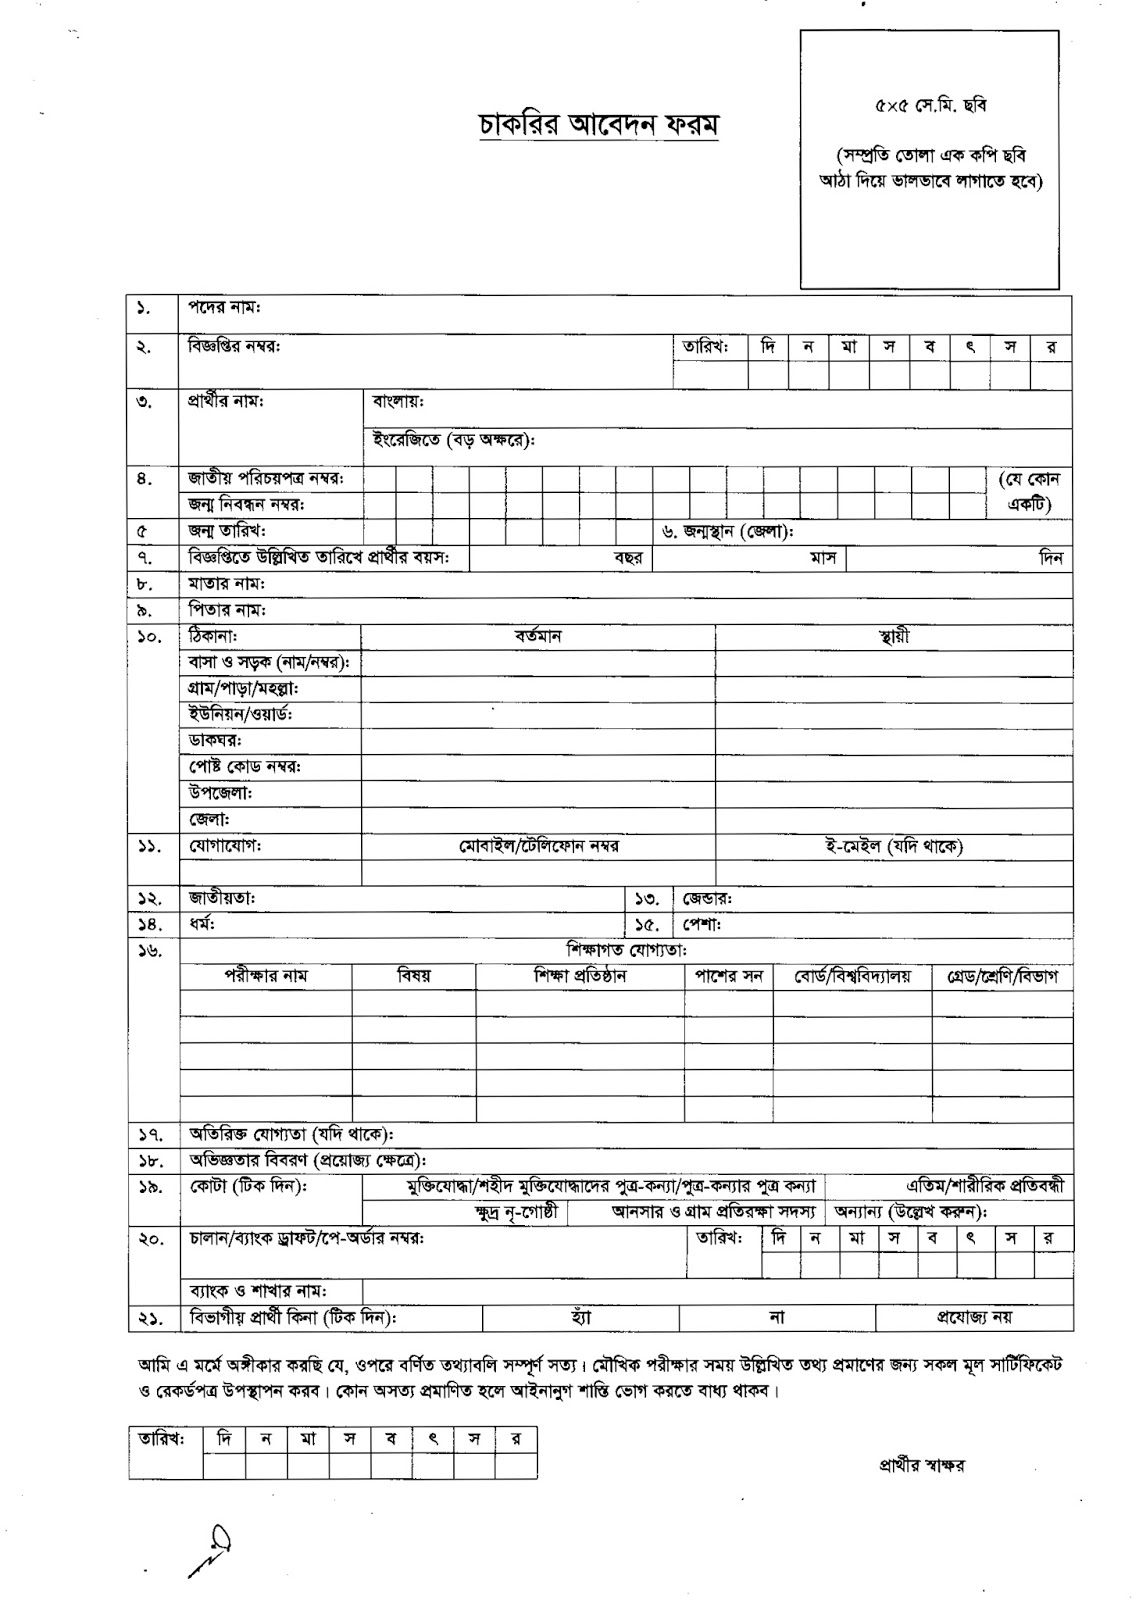  Civil Aviation Authority of Bangladesh (Caab) Job ‍Application Form